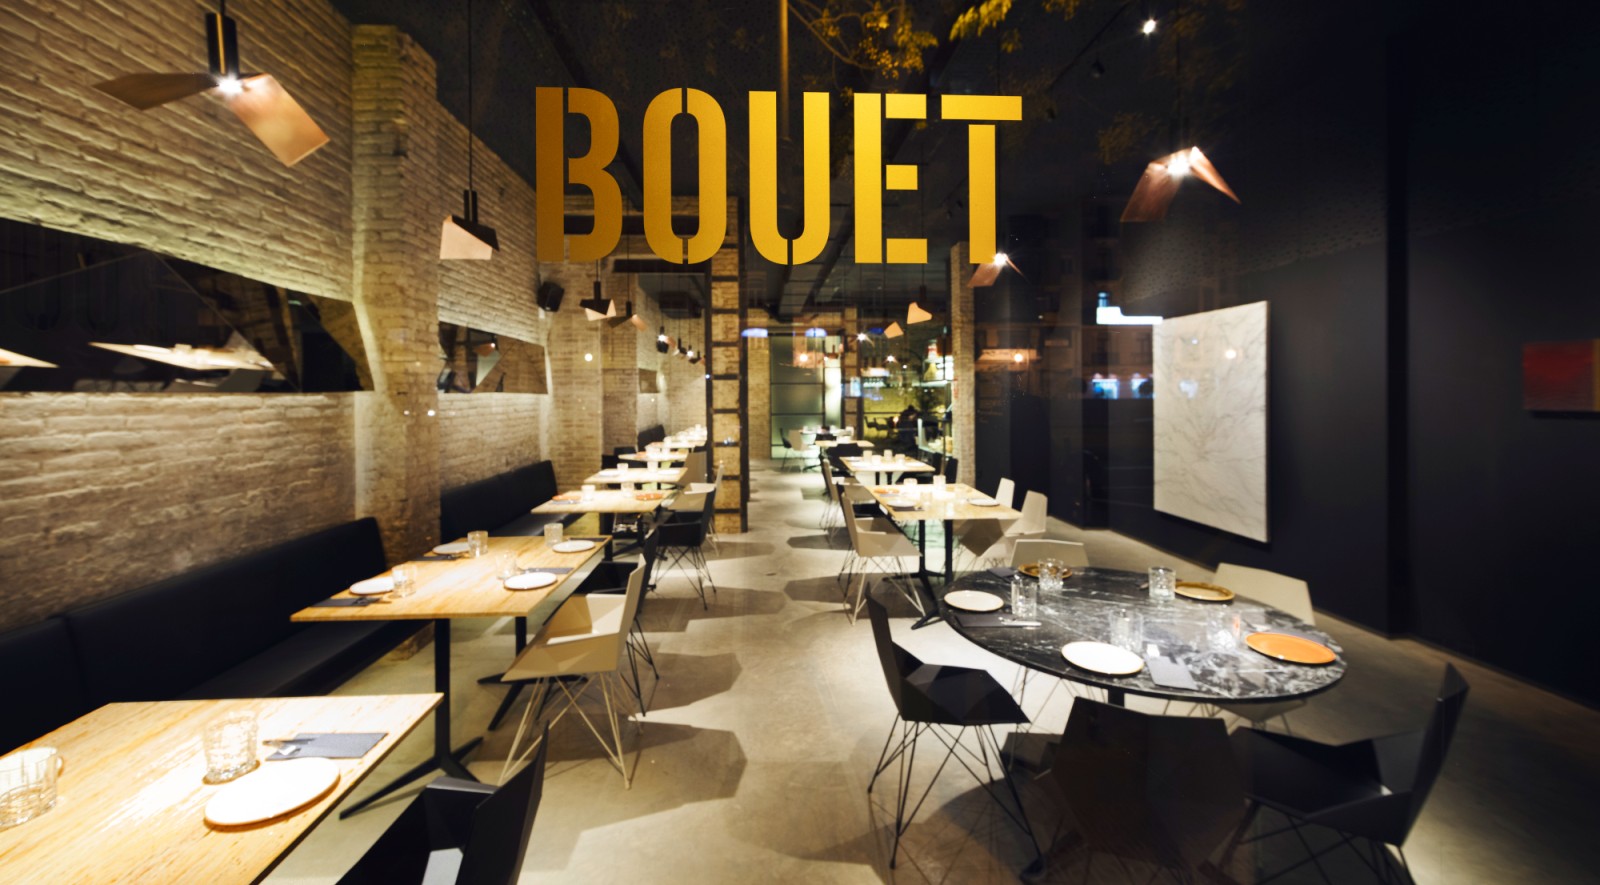 Bouet Restaurant